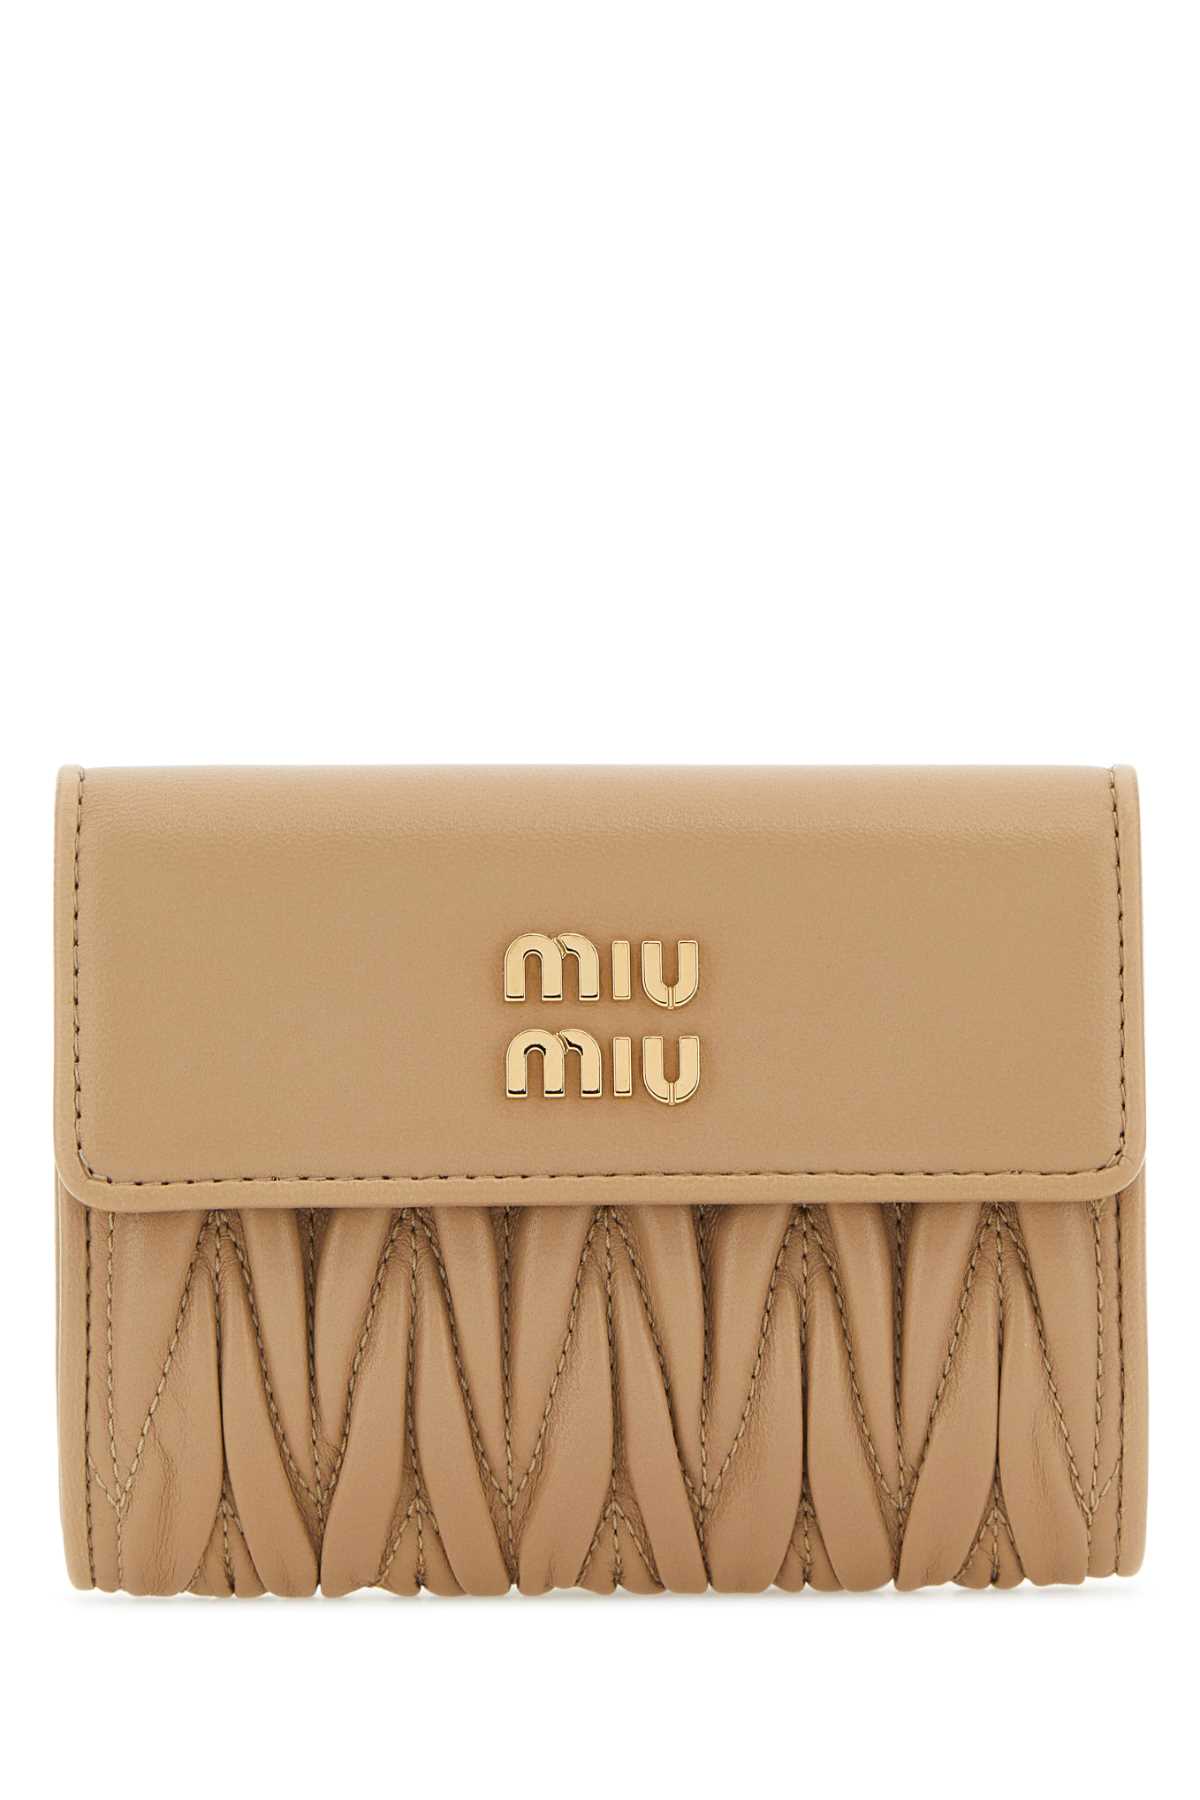 Miu Miu Sand Leather Wallet In Brown